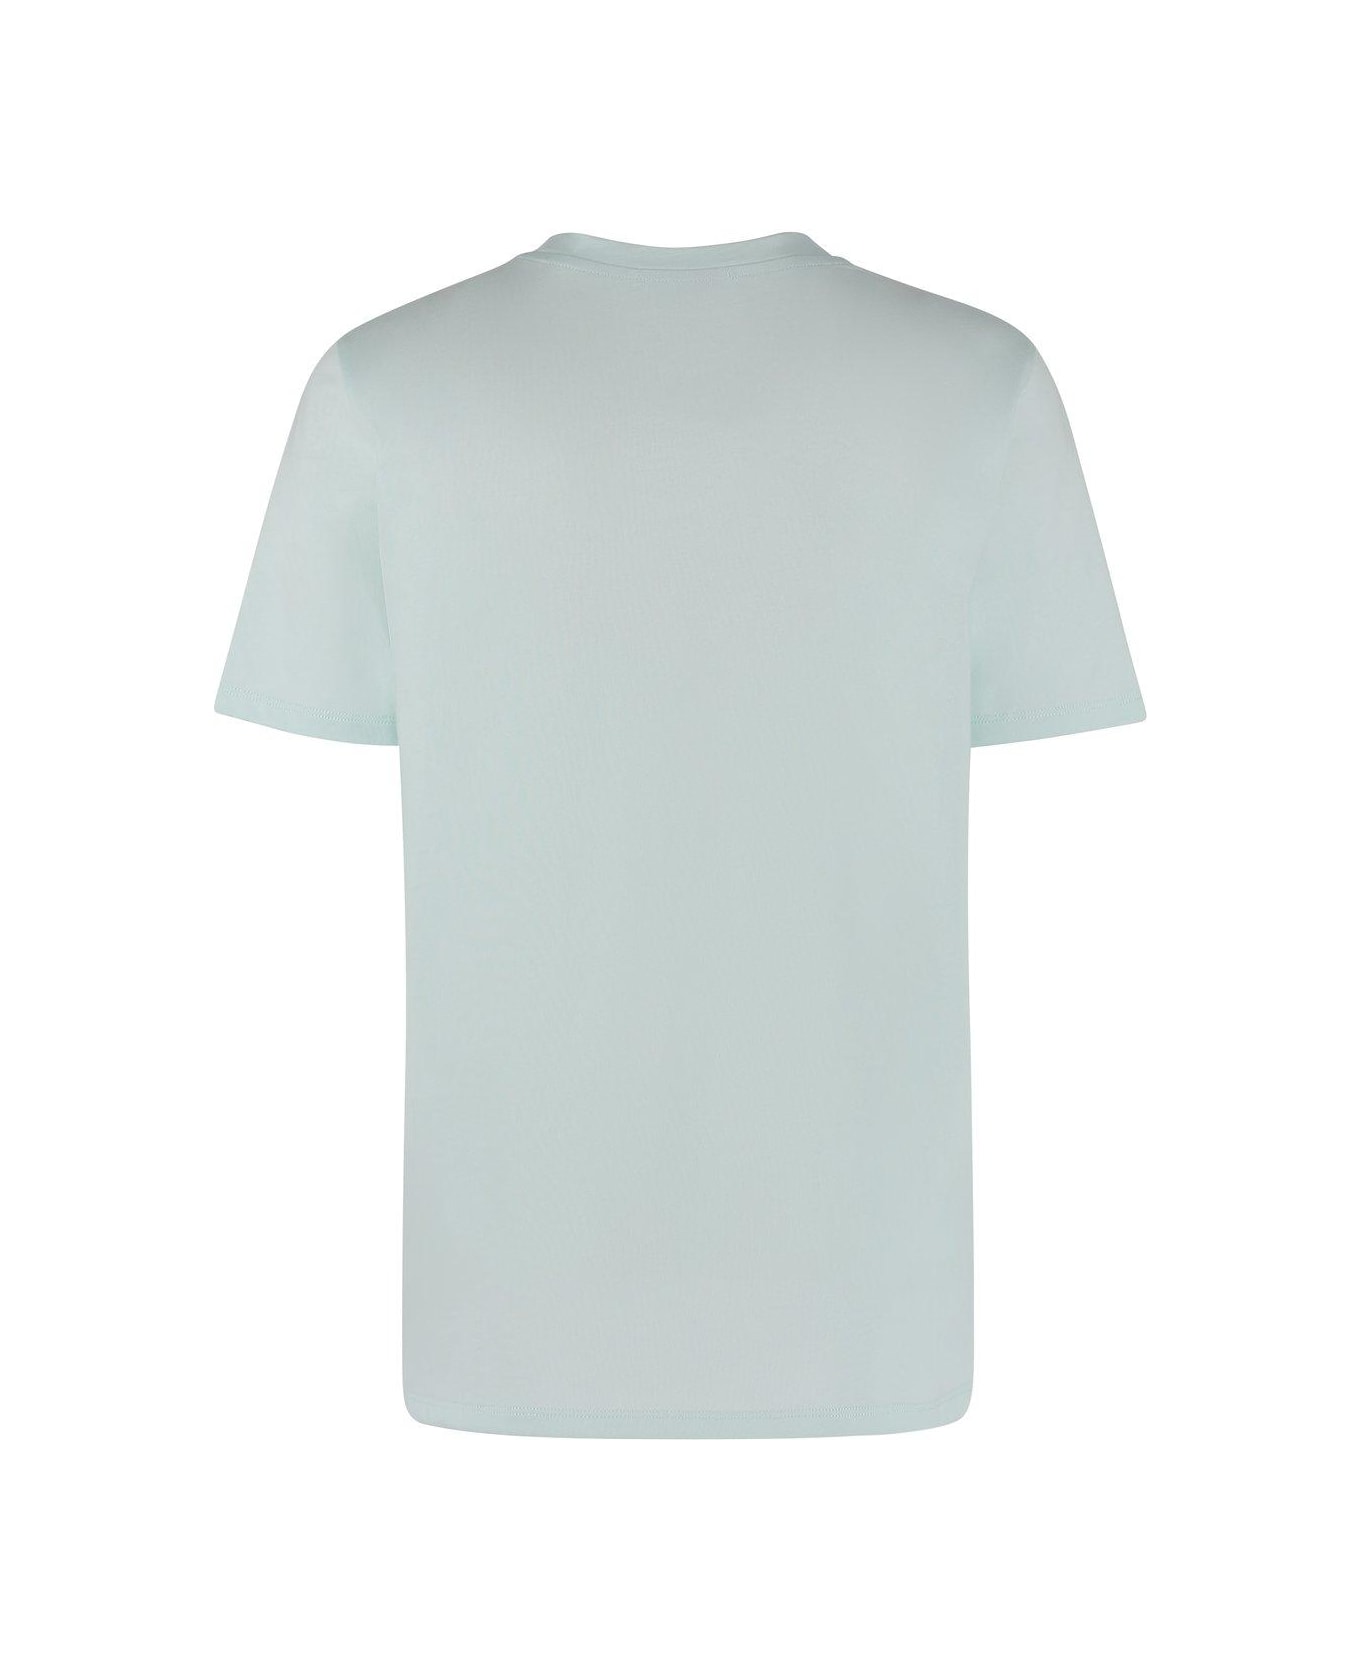 Balmain Logo Printed Crewneck T-shirt - Vert pâle/blanc